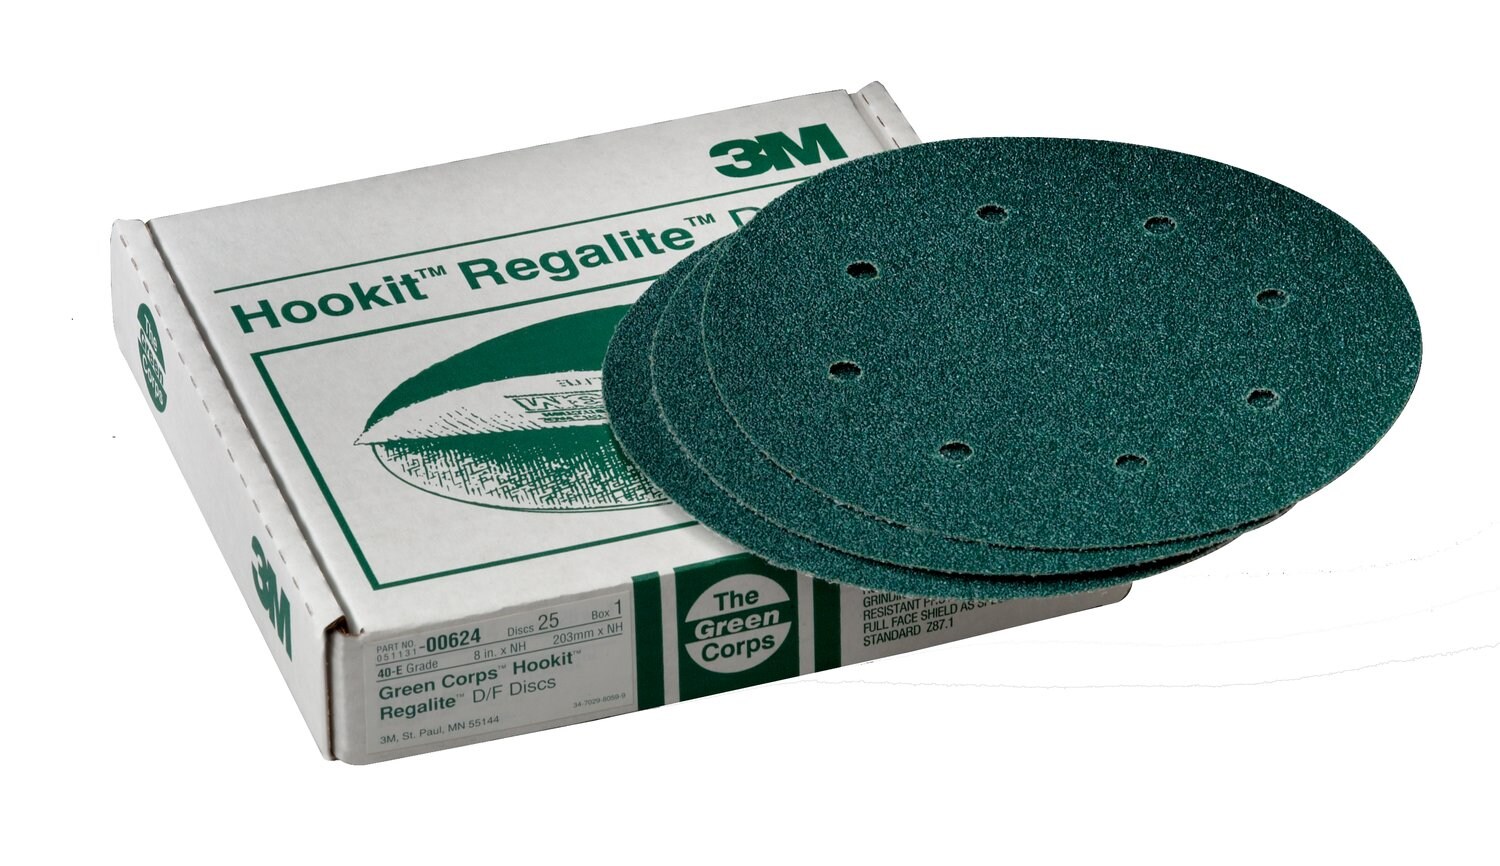 7000120350 - 3M Green Corps Hookit Disc Dust Free, 00624, 8 in, 40, 25 discs per
carton, 5 cartons per case